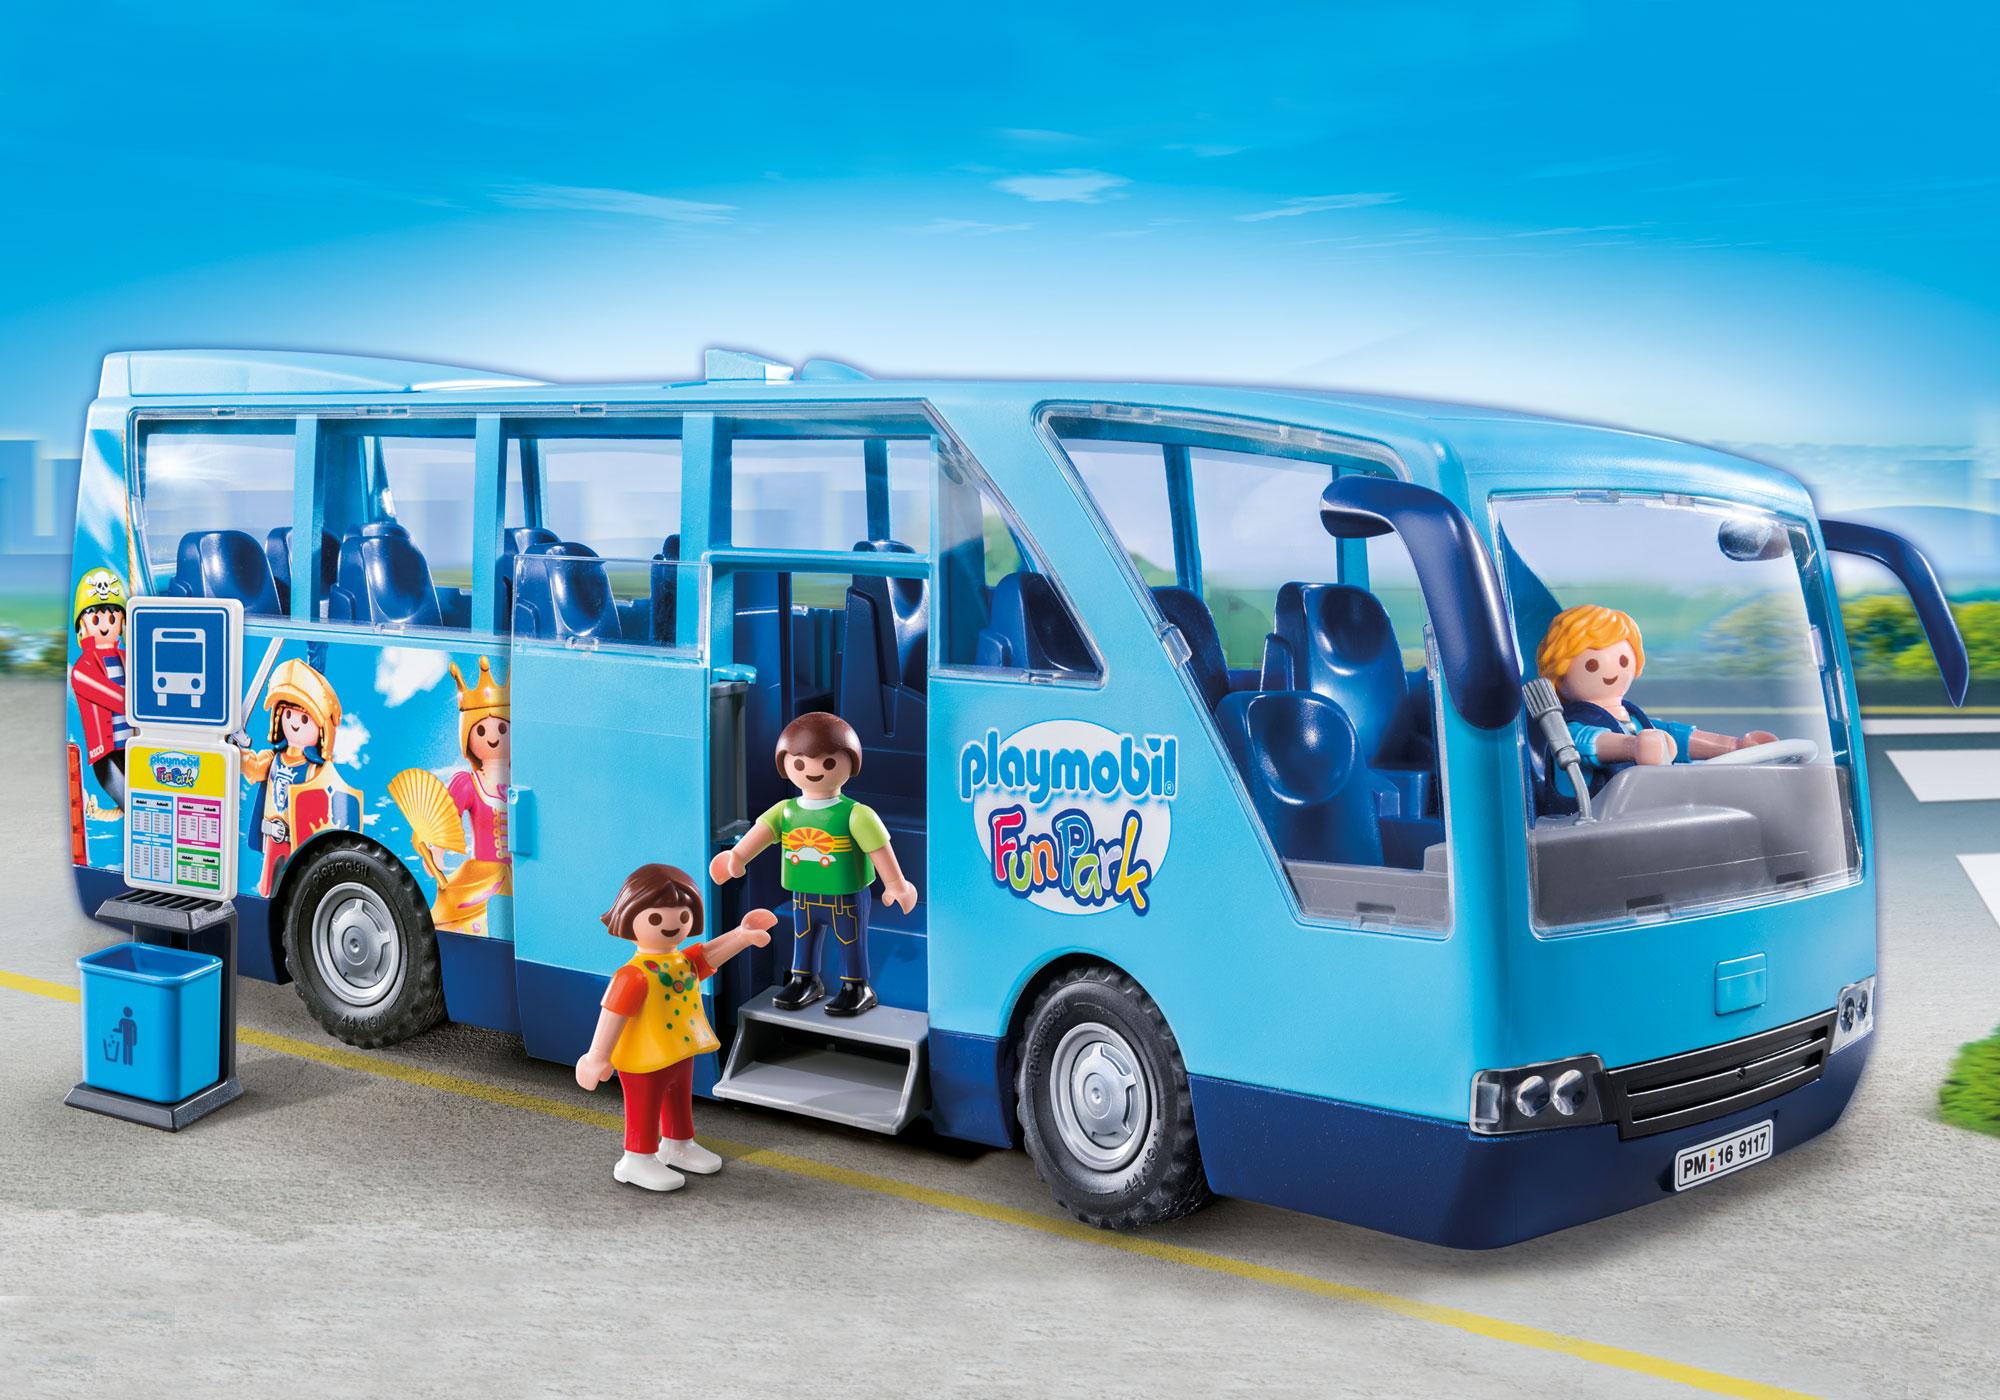 playmobil city life bus